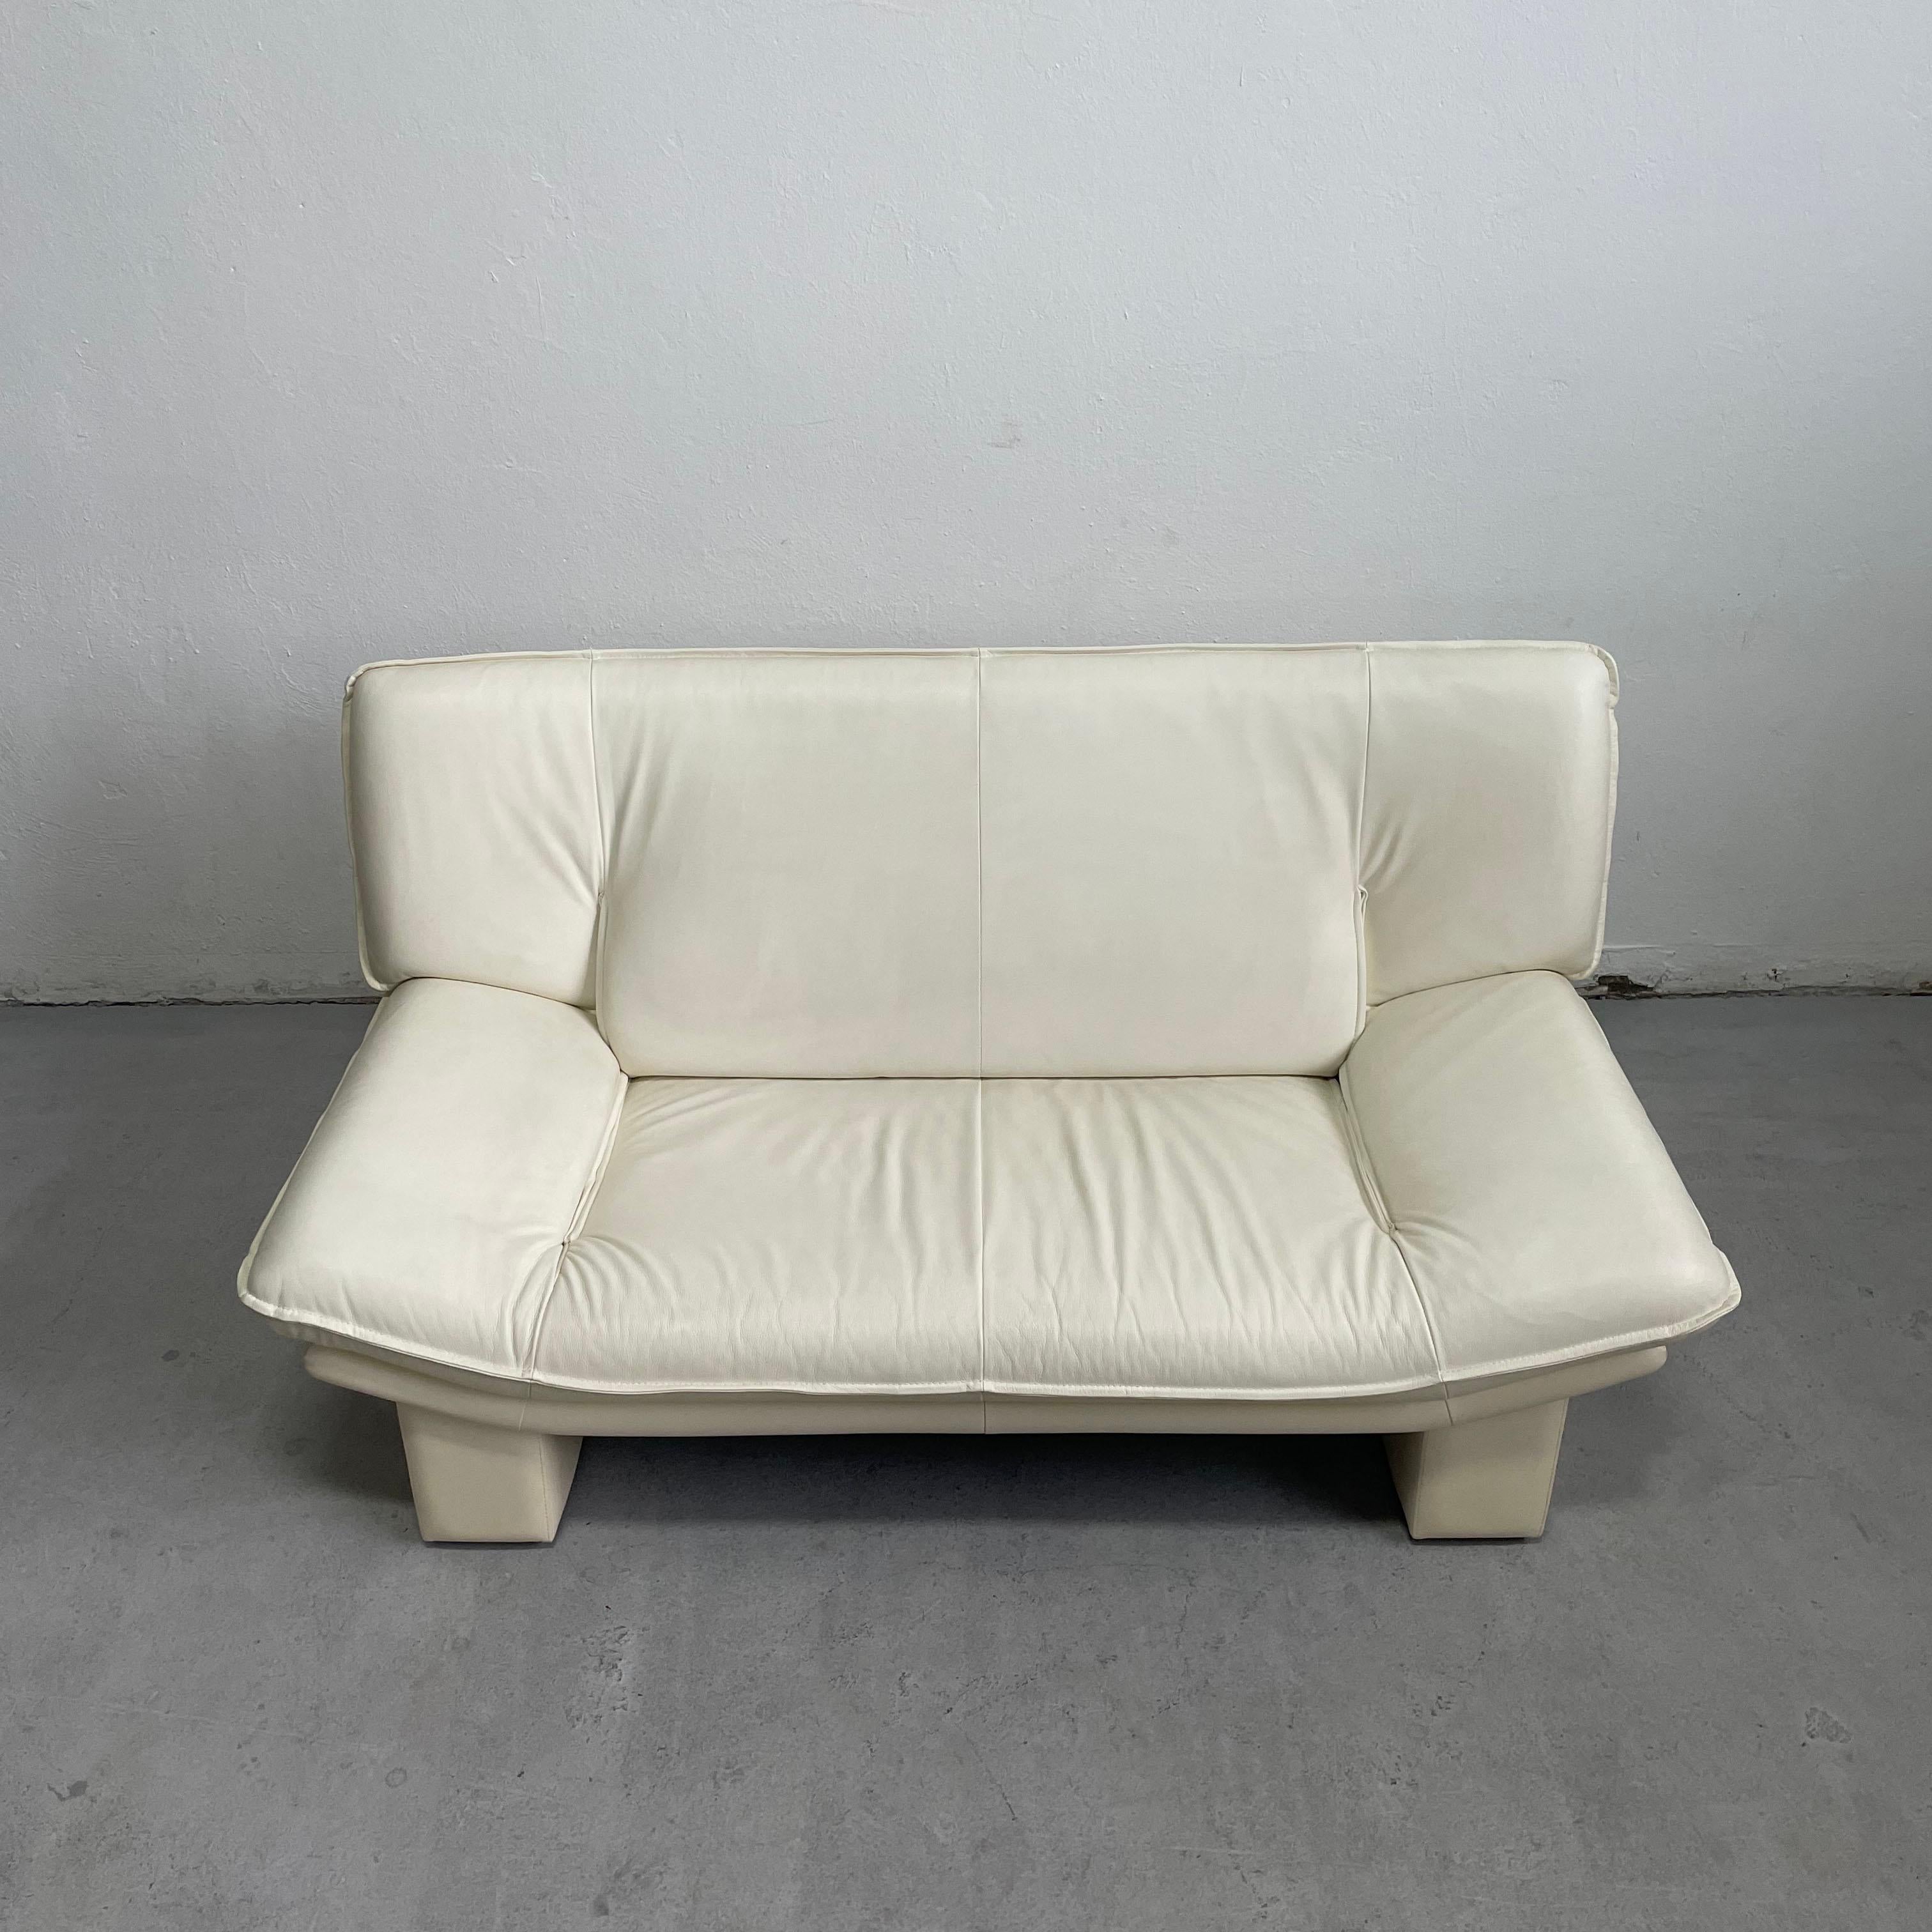 Post-Modern Nicoletti Salotti Postmodern Italian Ivory White Leather or Leatherete Sofa 1980